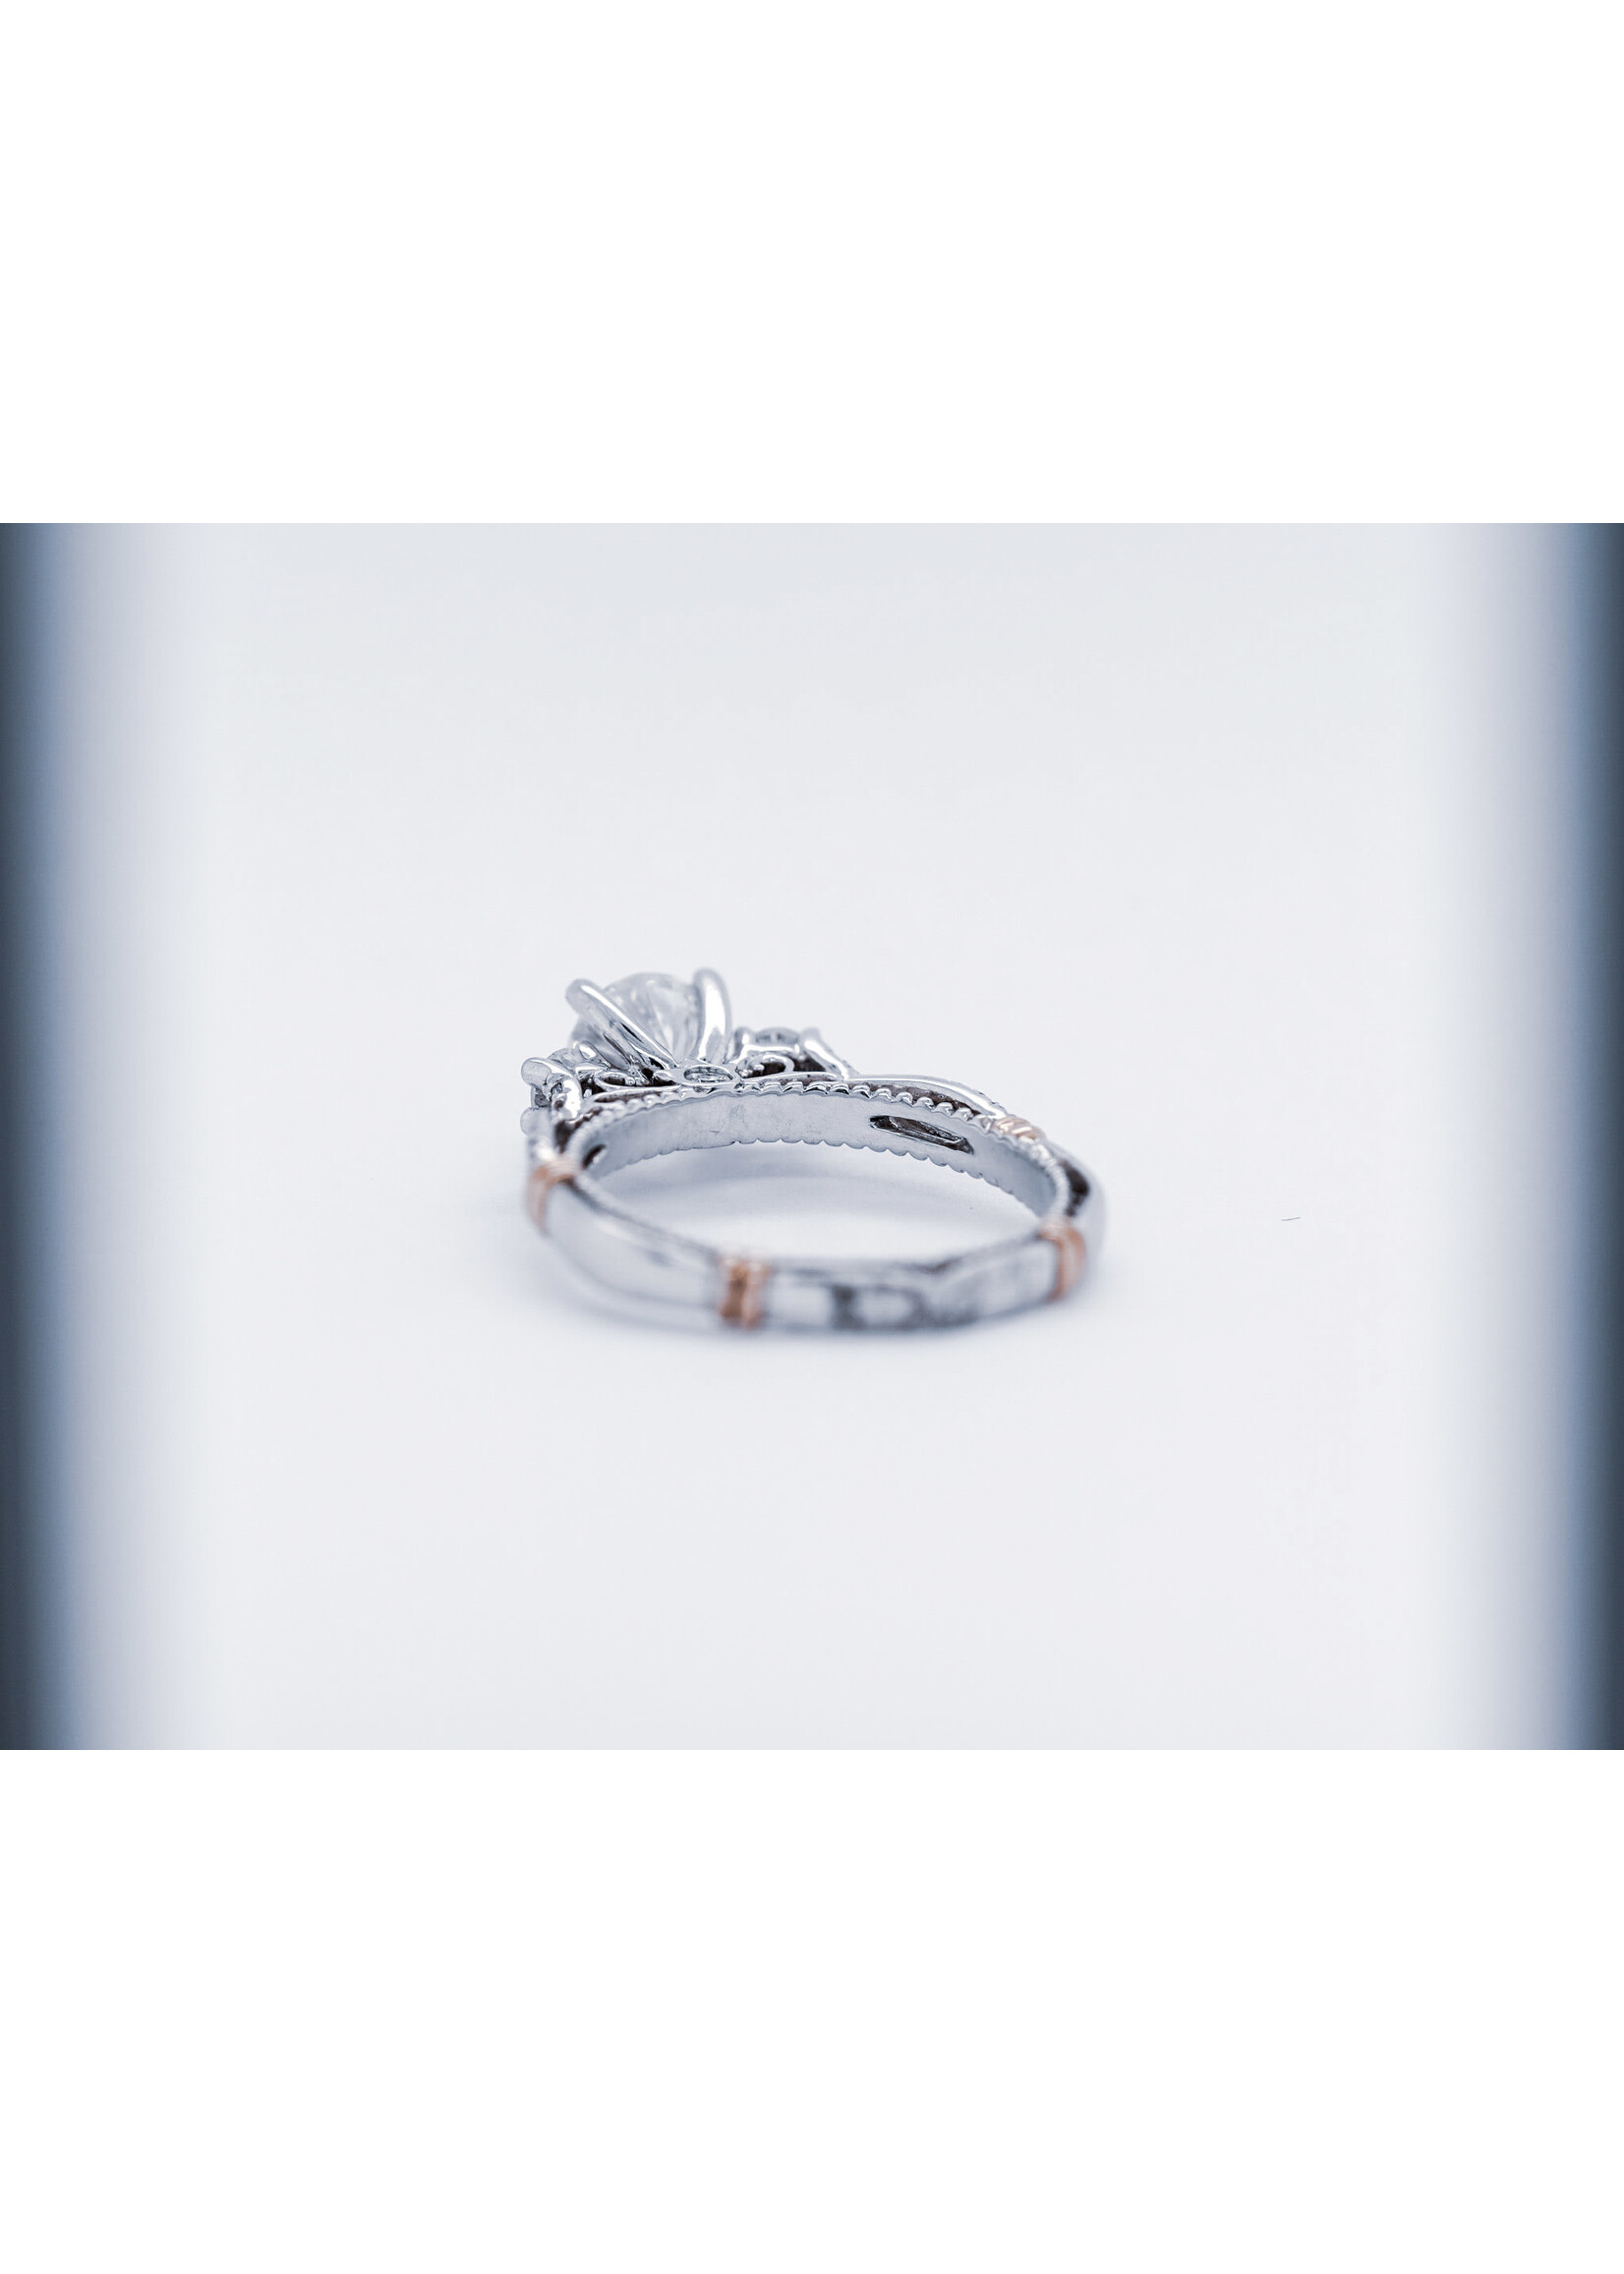 14K 3.42g 1.31ctw (0.96ctr) GIA F/I1 Round Diamond Verragio Engagement Ring (size 6)